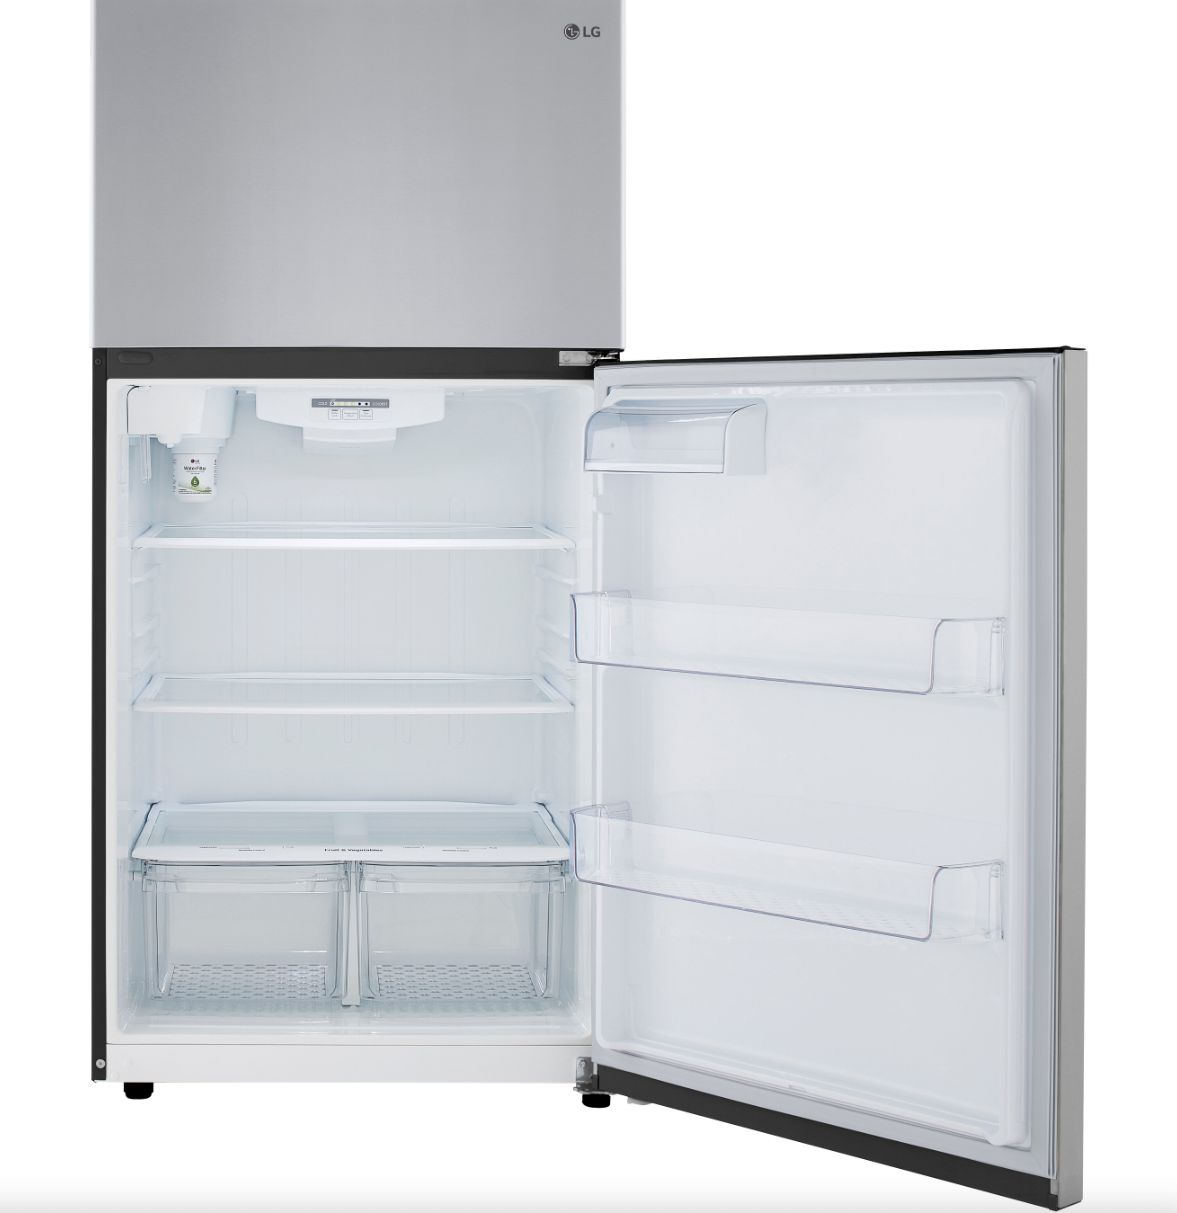 LG 33 Inch Top Freezer Refrigerator in Stainless Steel 24 Cu. Ft. (LRTLS2403S)